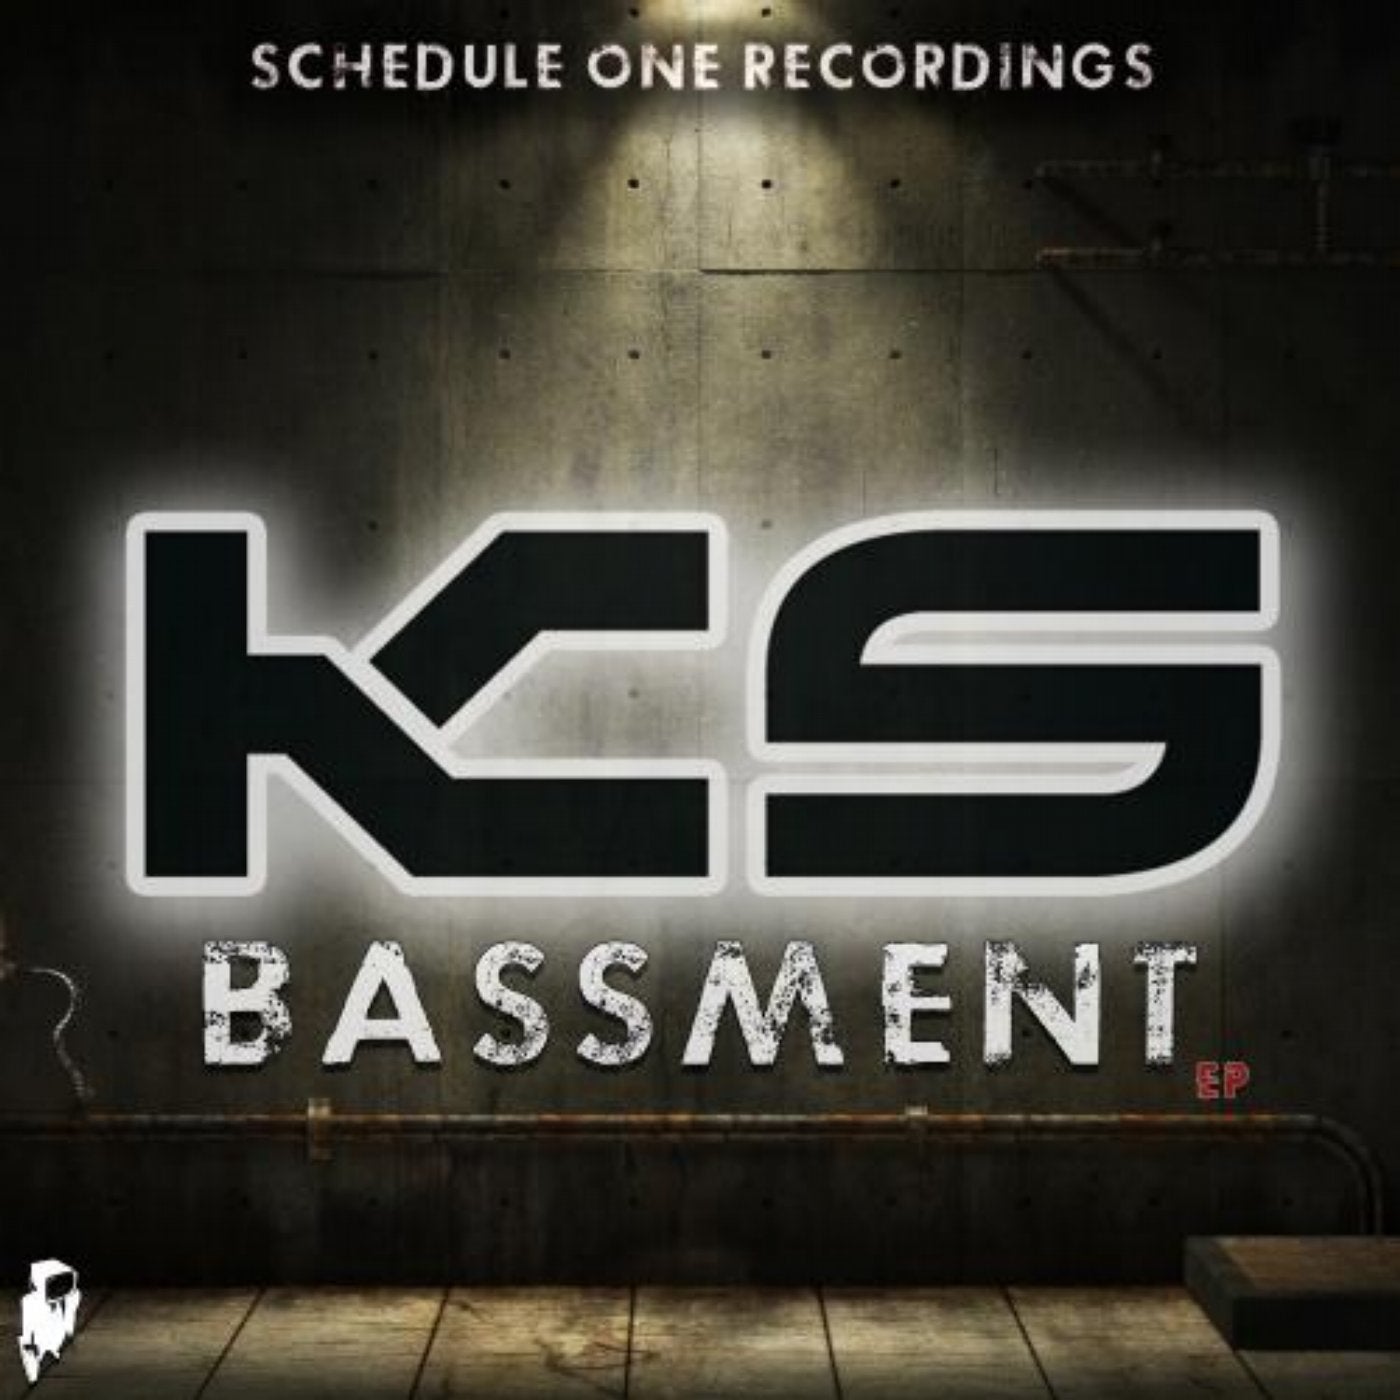 Bassment EP